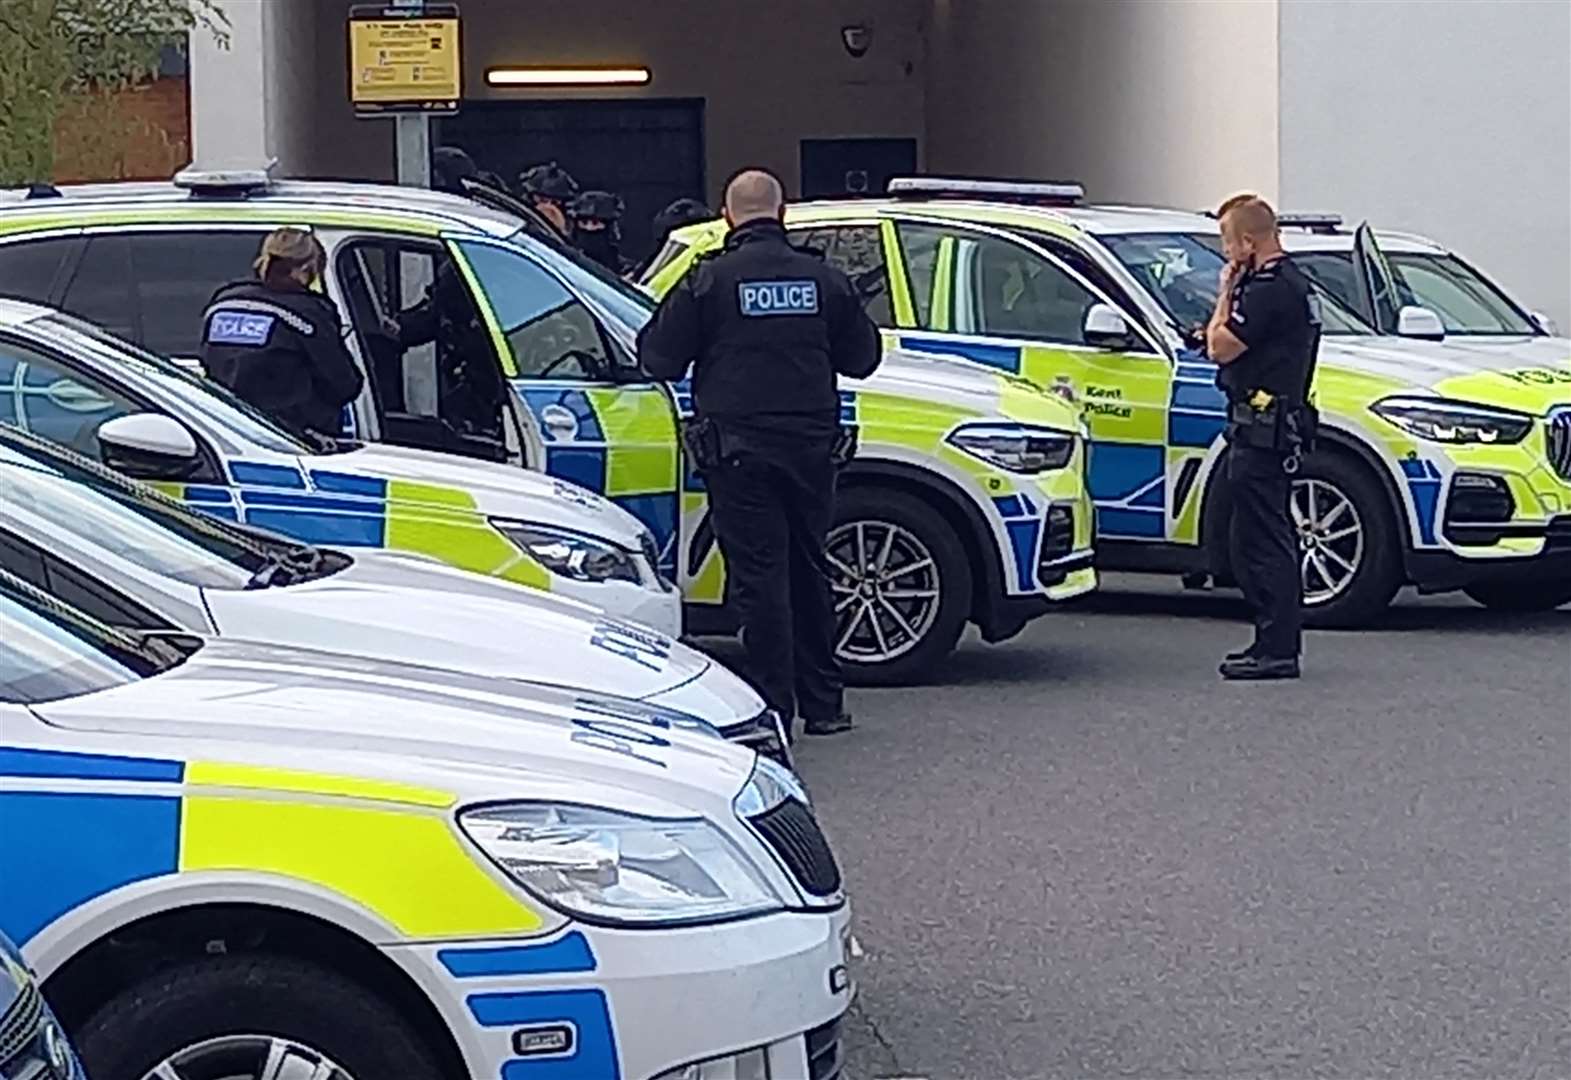 Armed police converge on Aldi supermarket